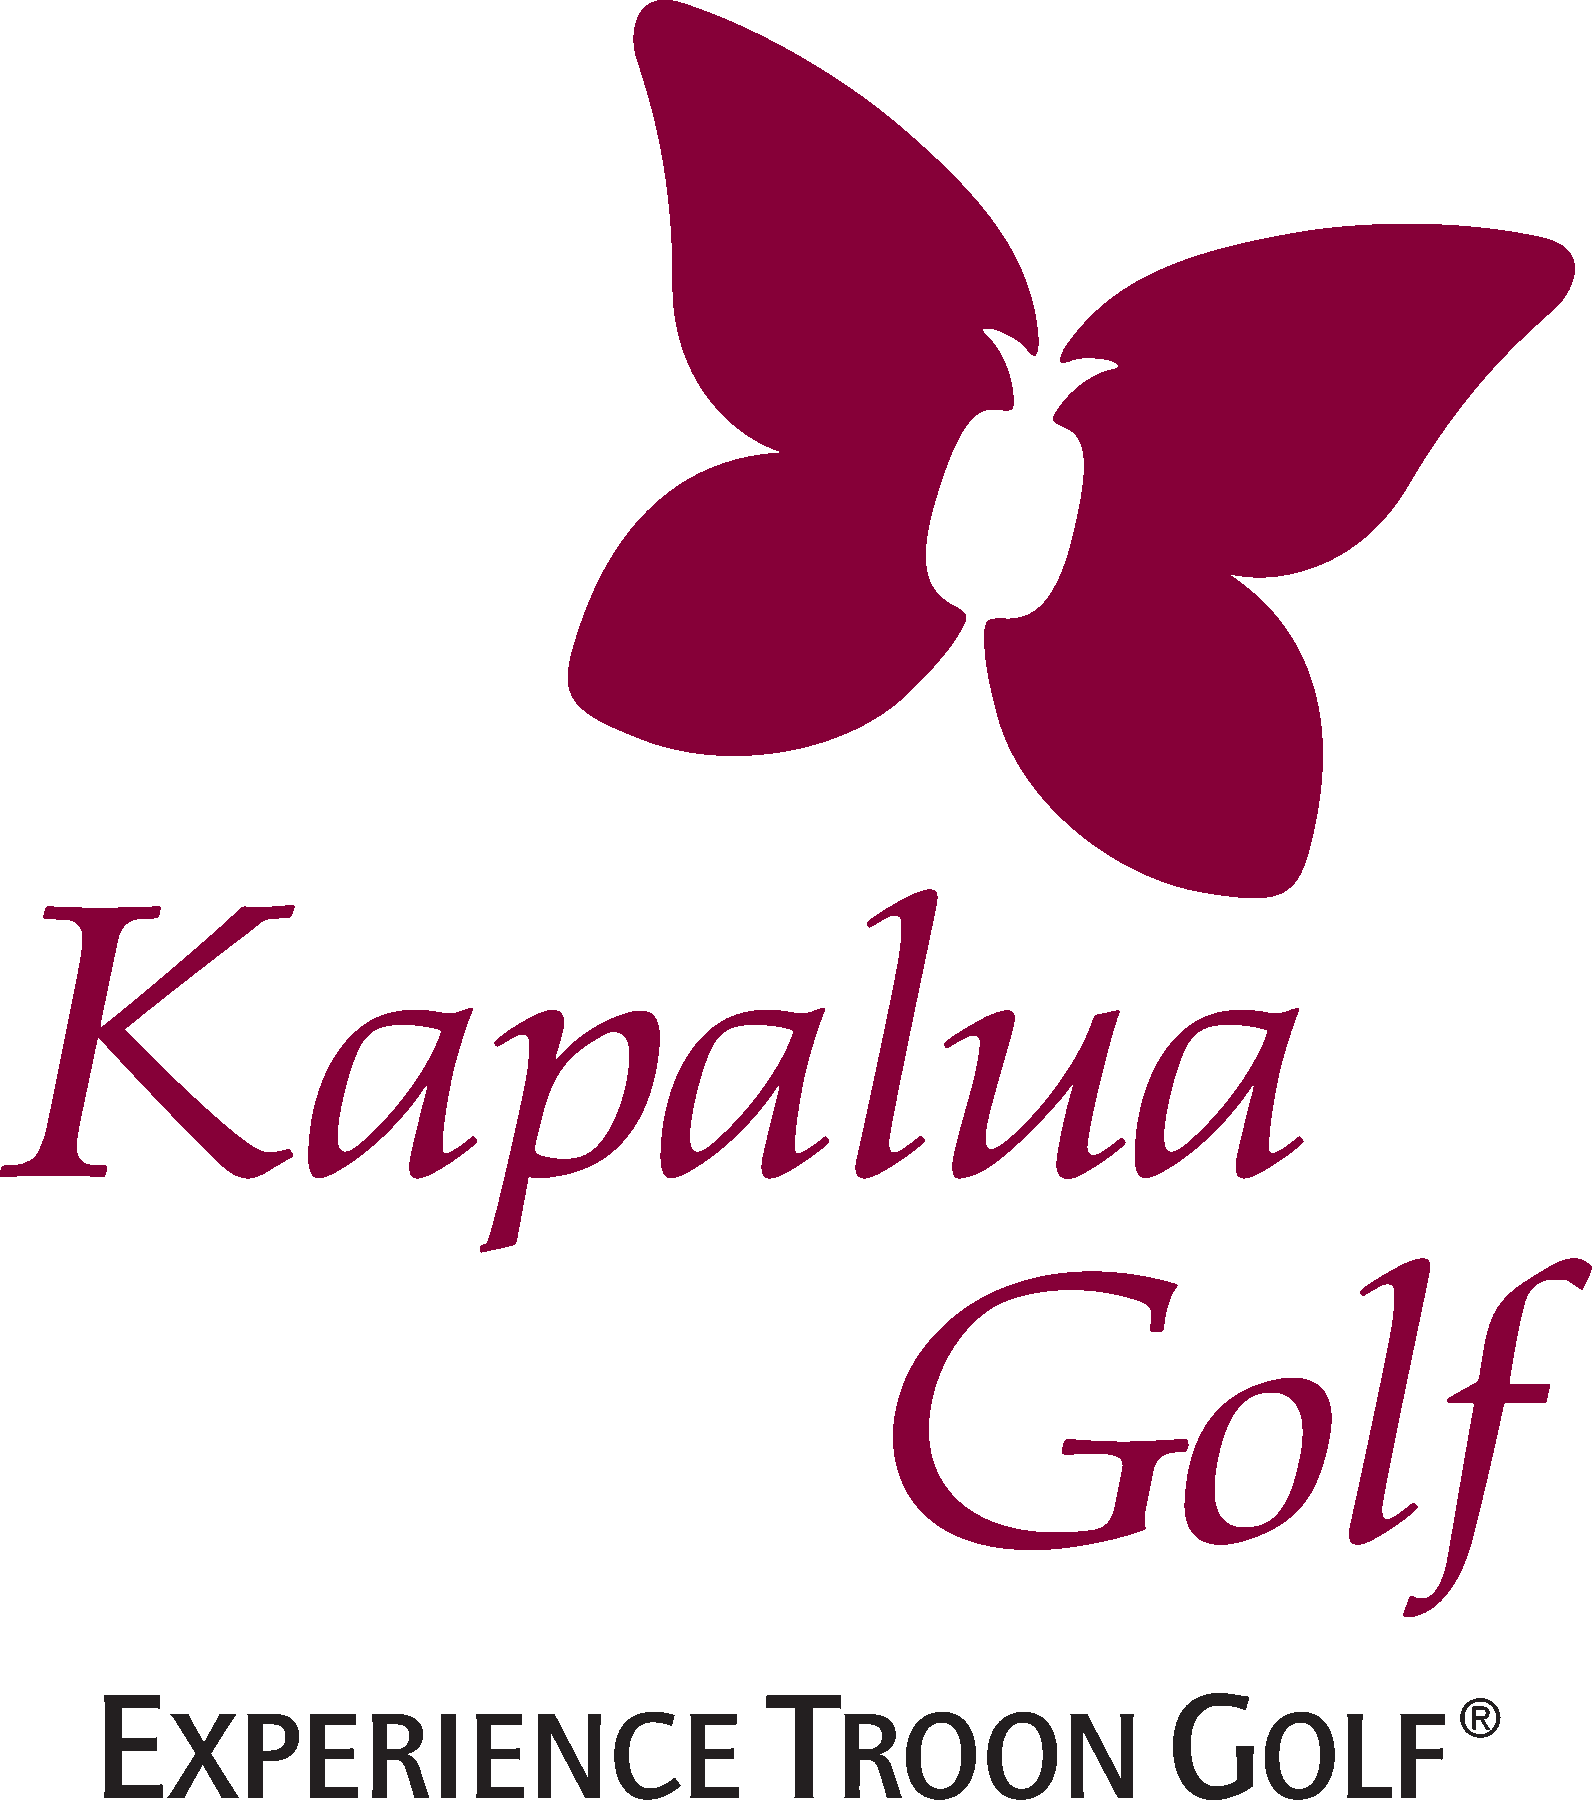 image of Kapalua Golf sponsor logo